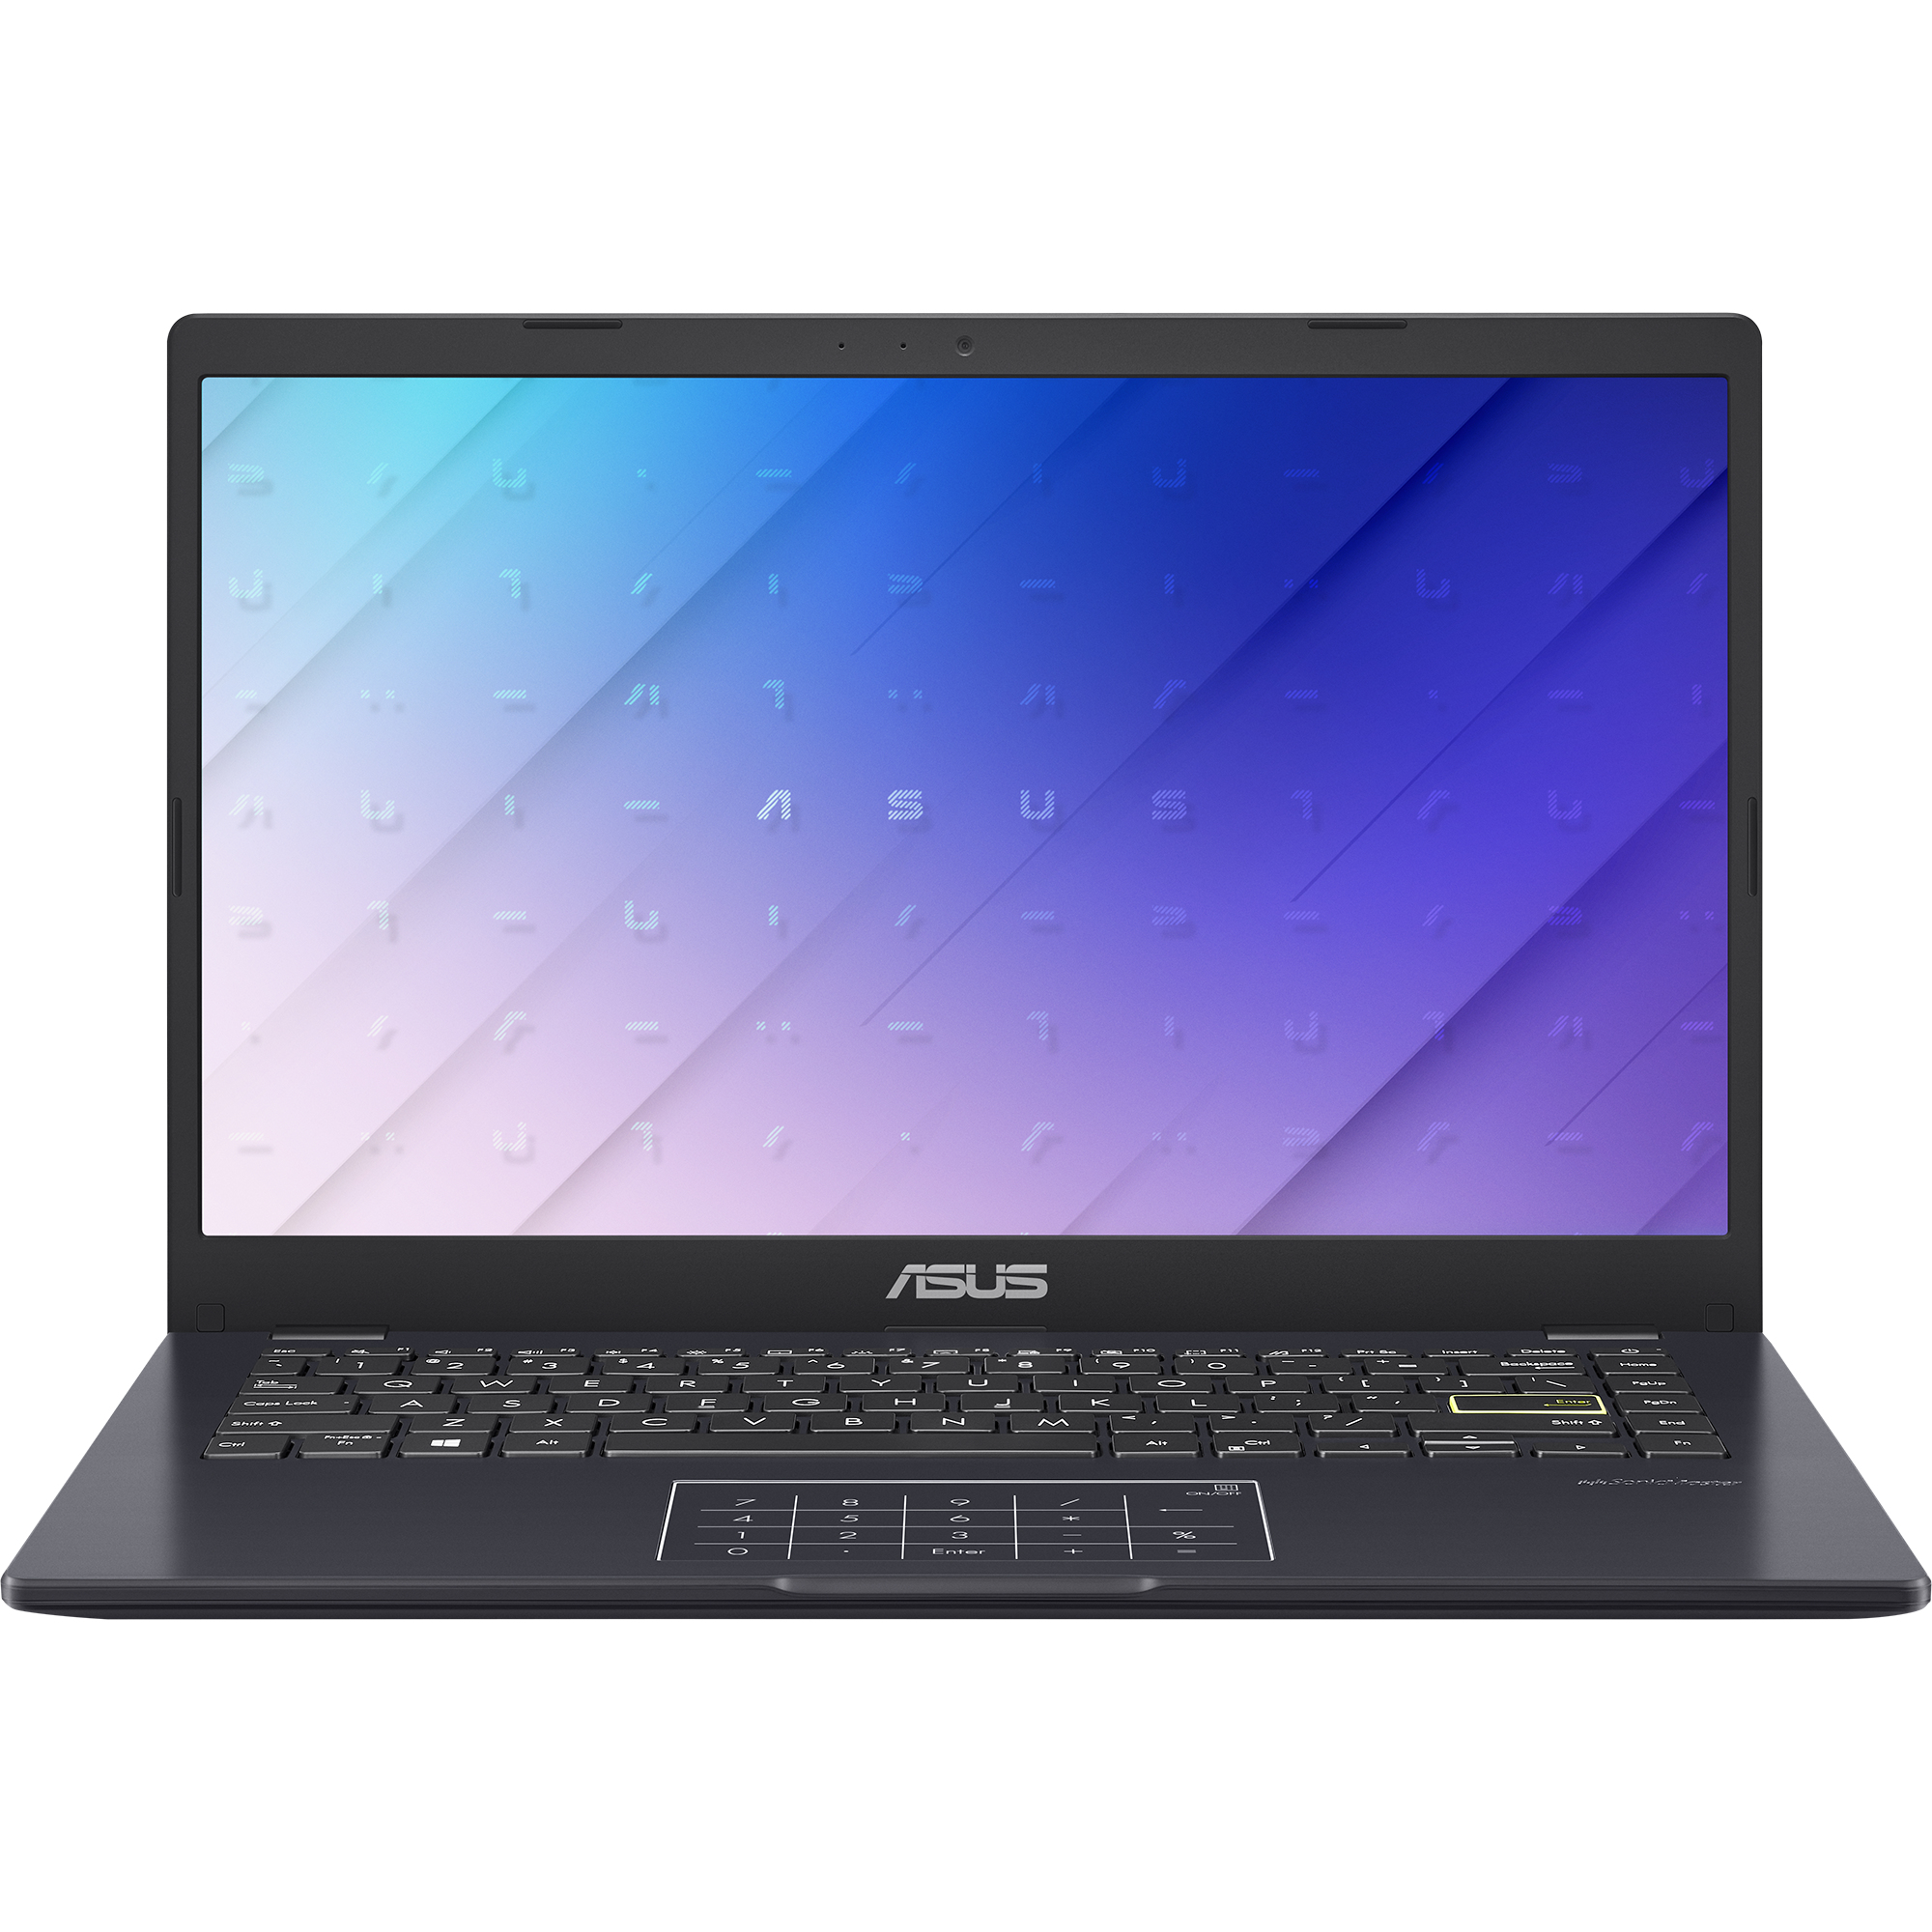 Asus E410MA 14" Laptop - Rose Pink